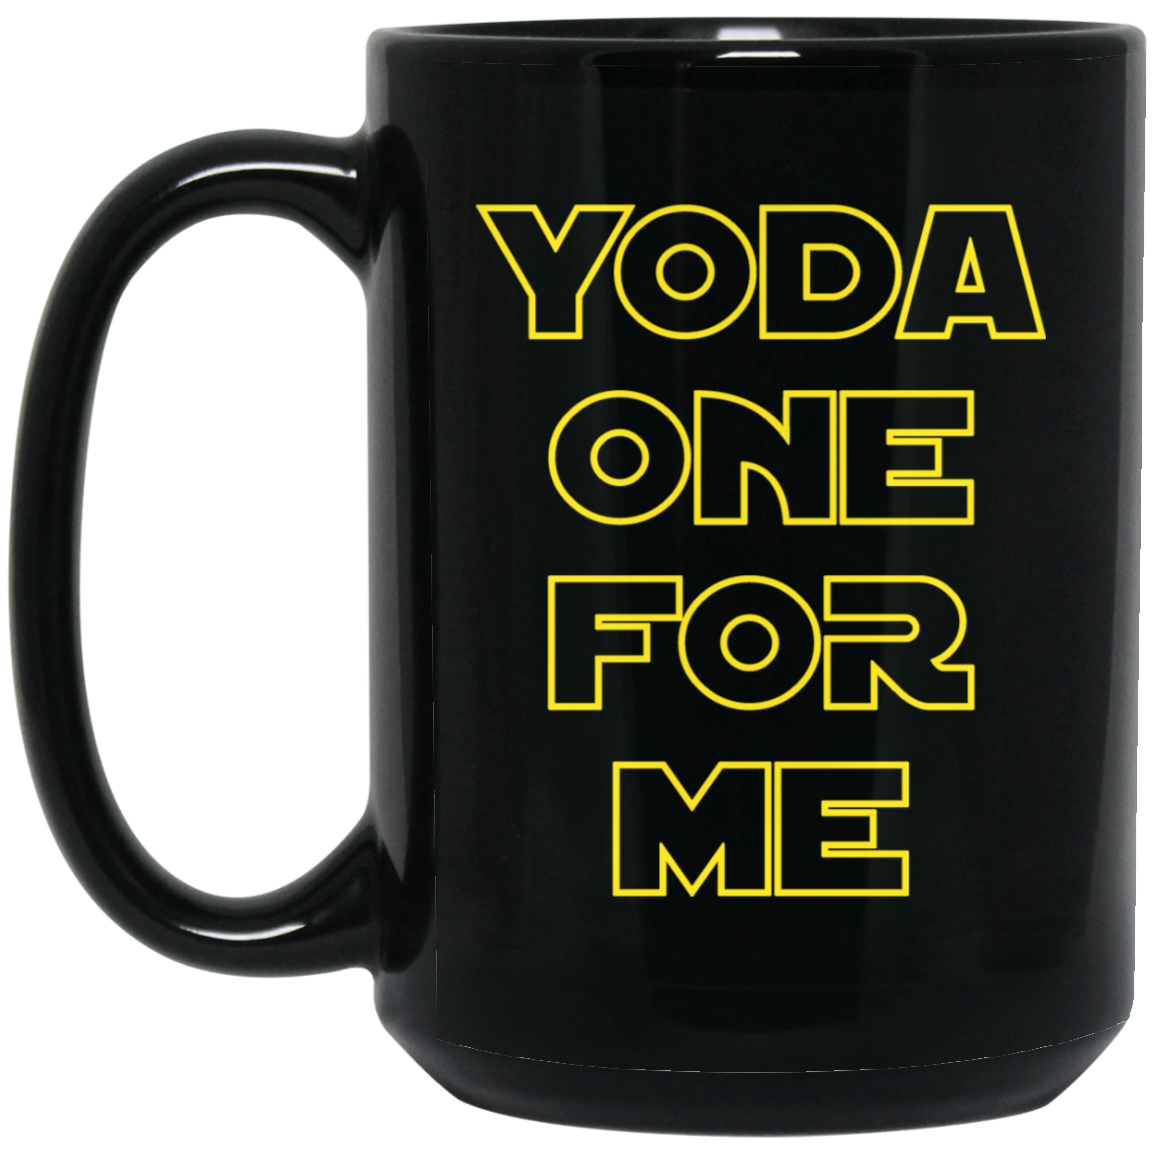 Yoda One For Me 15 oz. Black Mug